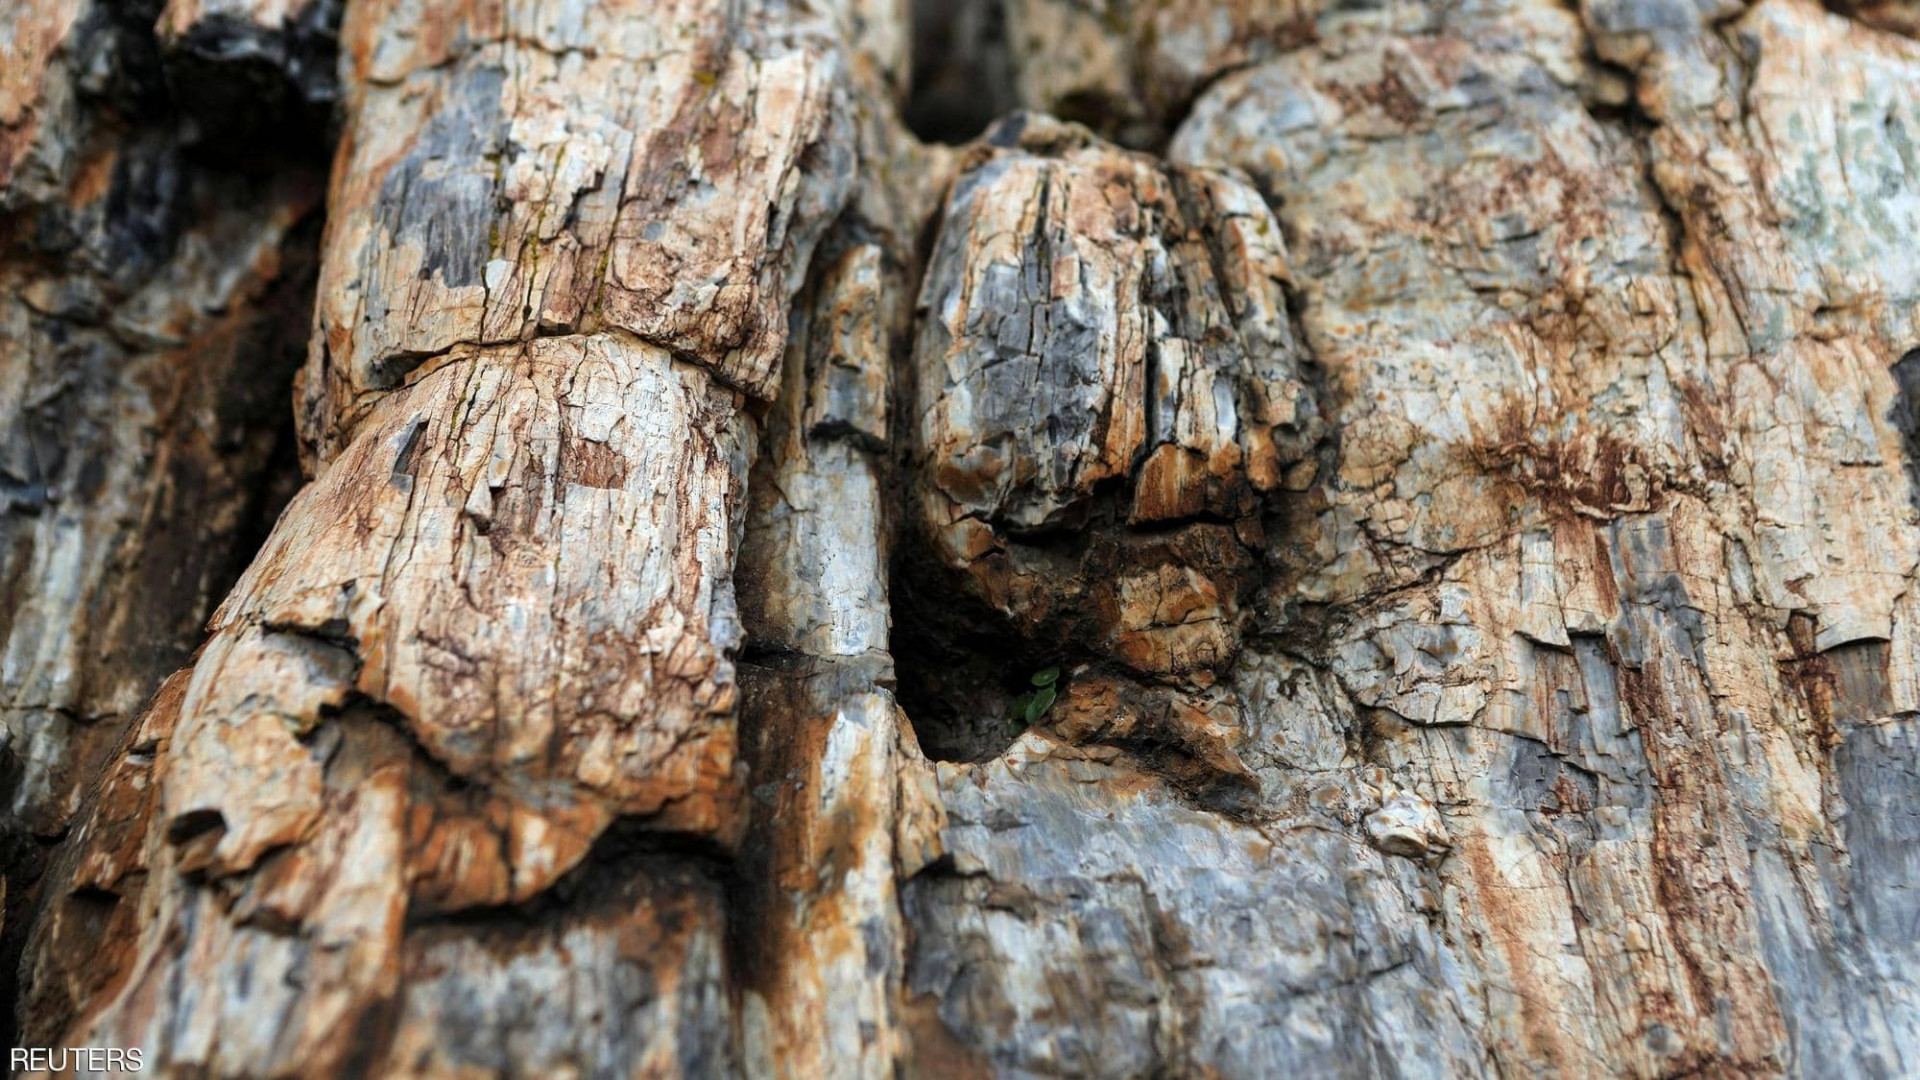 Scientists in Greece find 20 million year-old petrified tree - Shafaq News